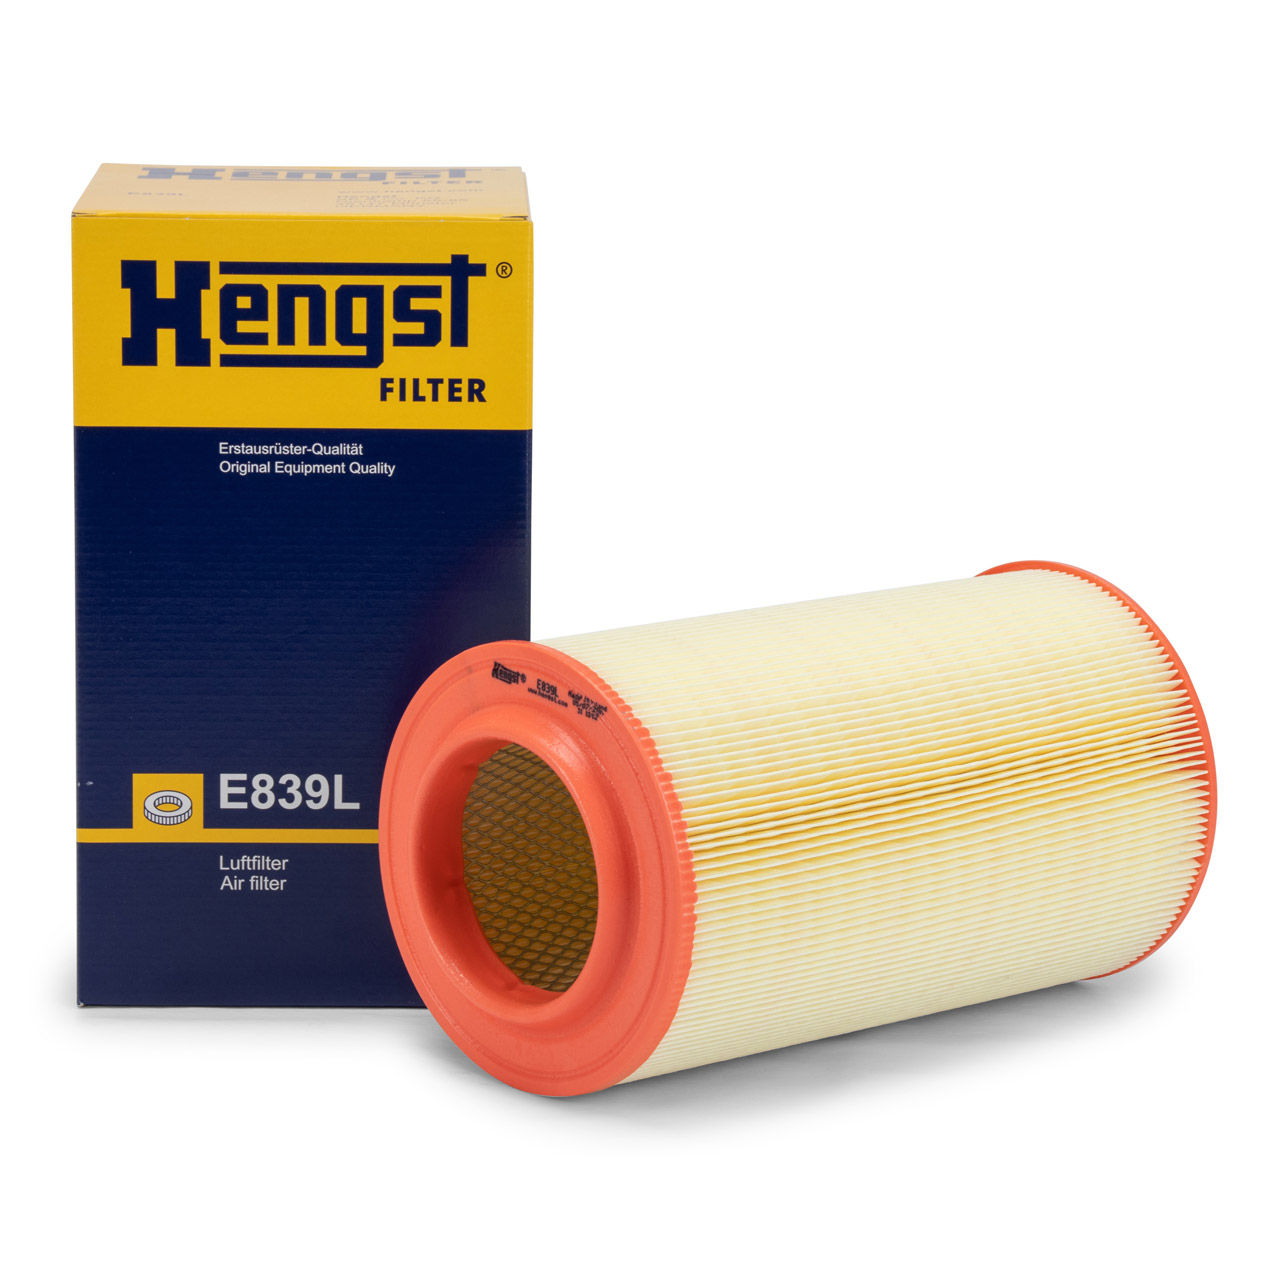 Luftfilter Hengst Filter E839L 